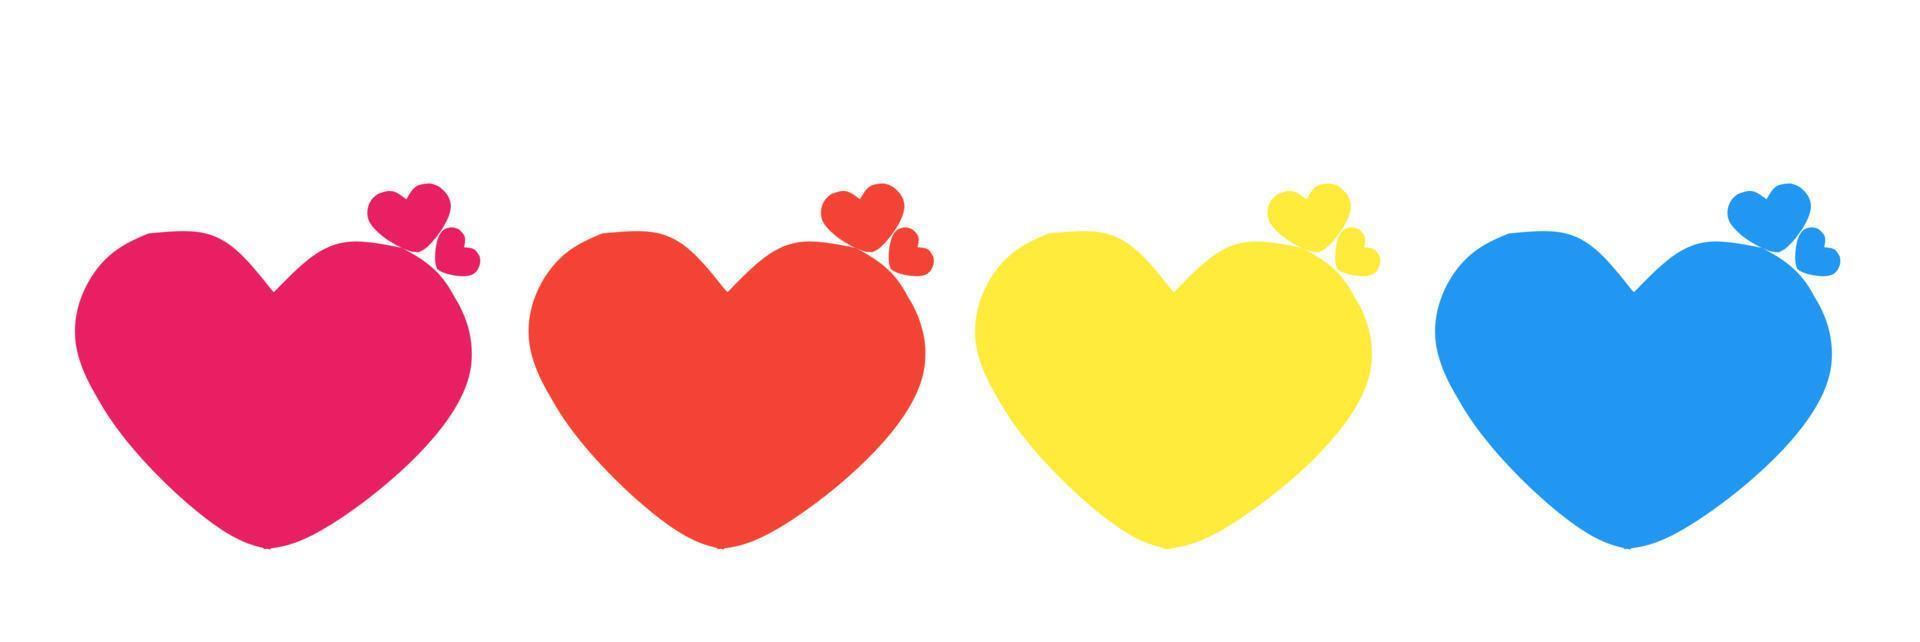 Love heart icon vector. Valentine's day romantic love symbols collection. Love concept. Design element for Valentine's day. vector